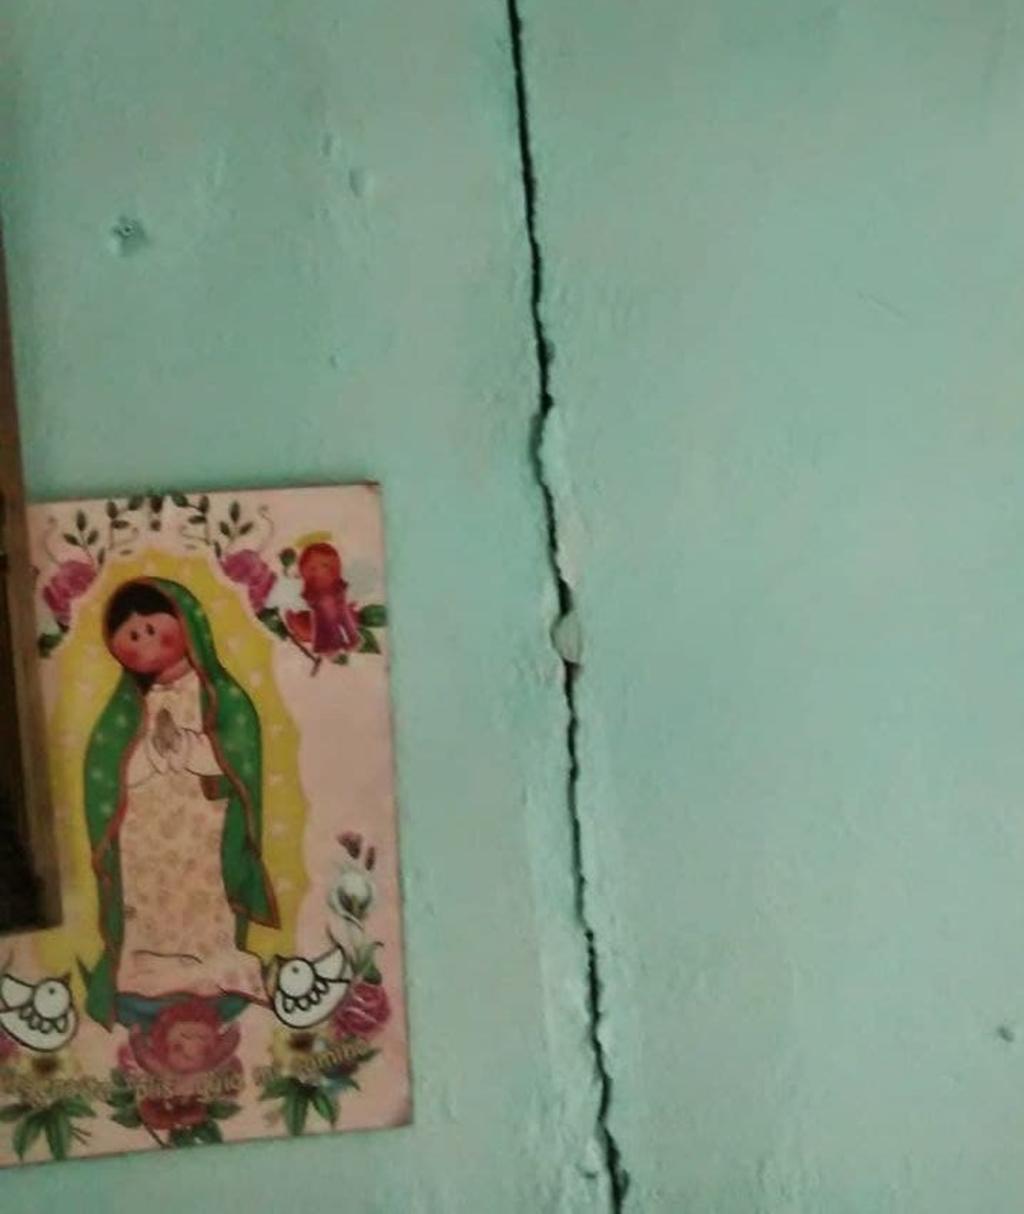 Sin cumplimiento, recomendación por viviendas afectadas por falla geológica en Ramos Arizpe